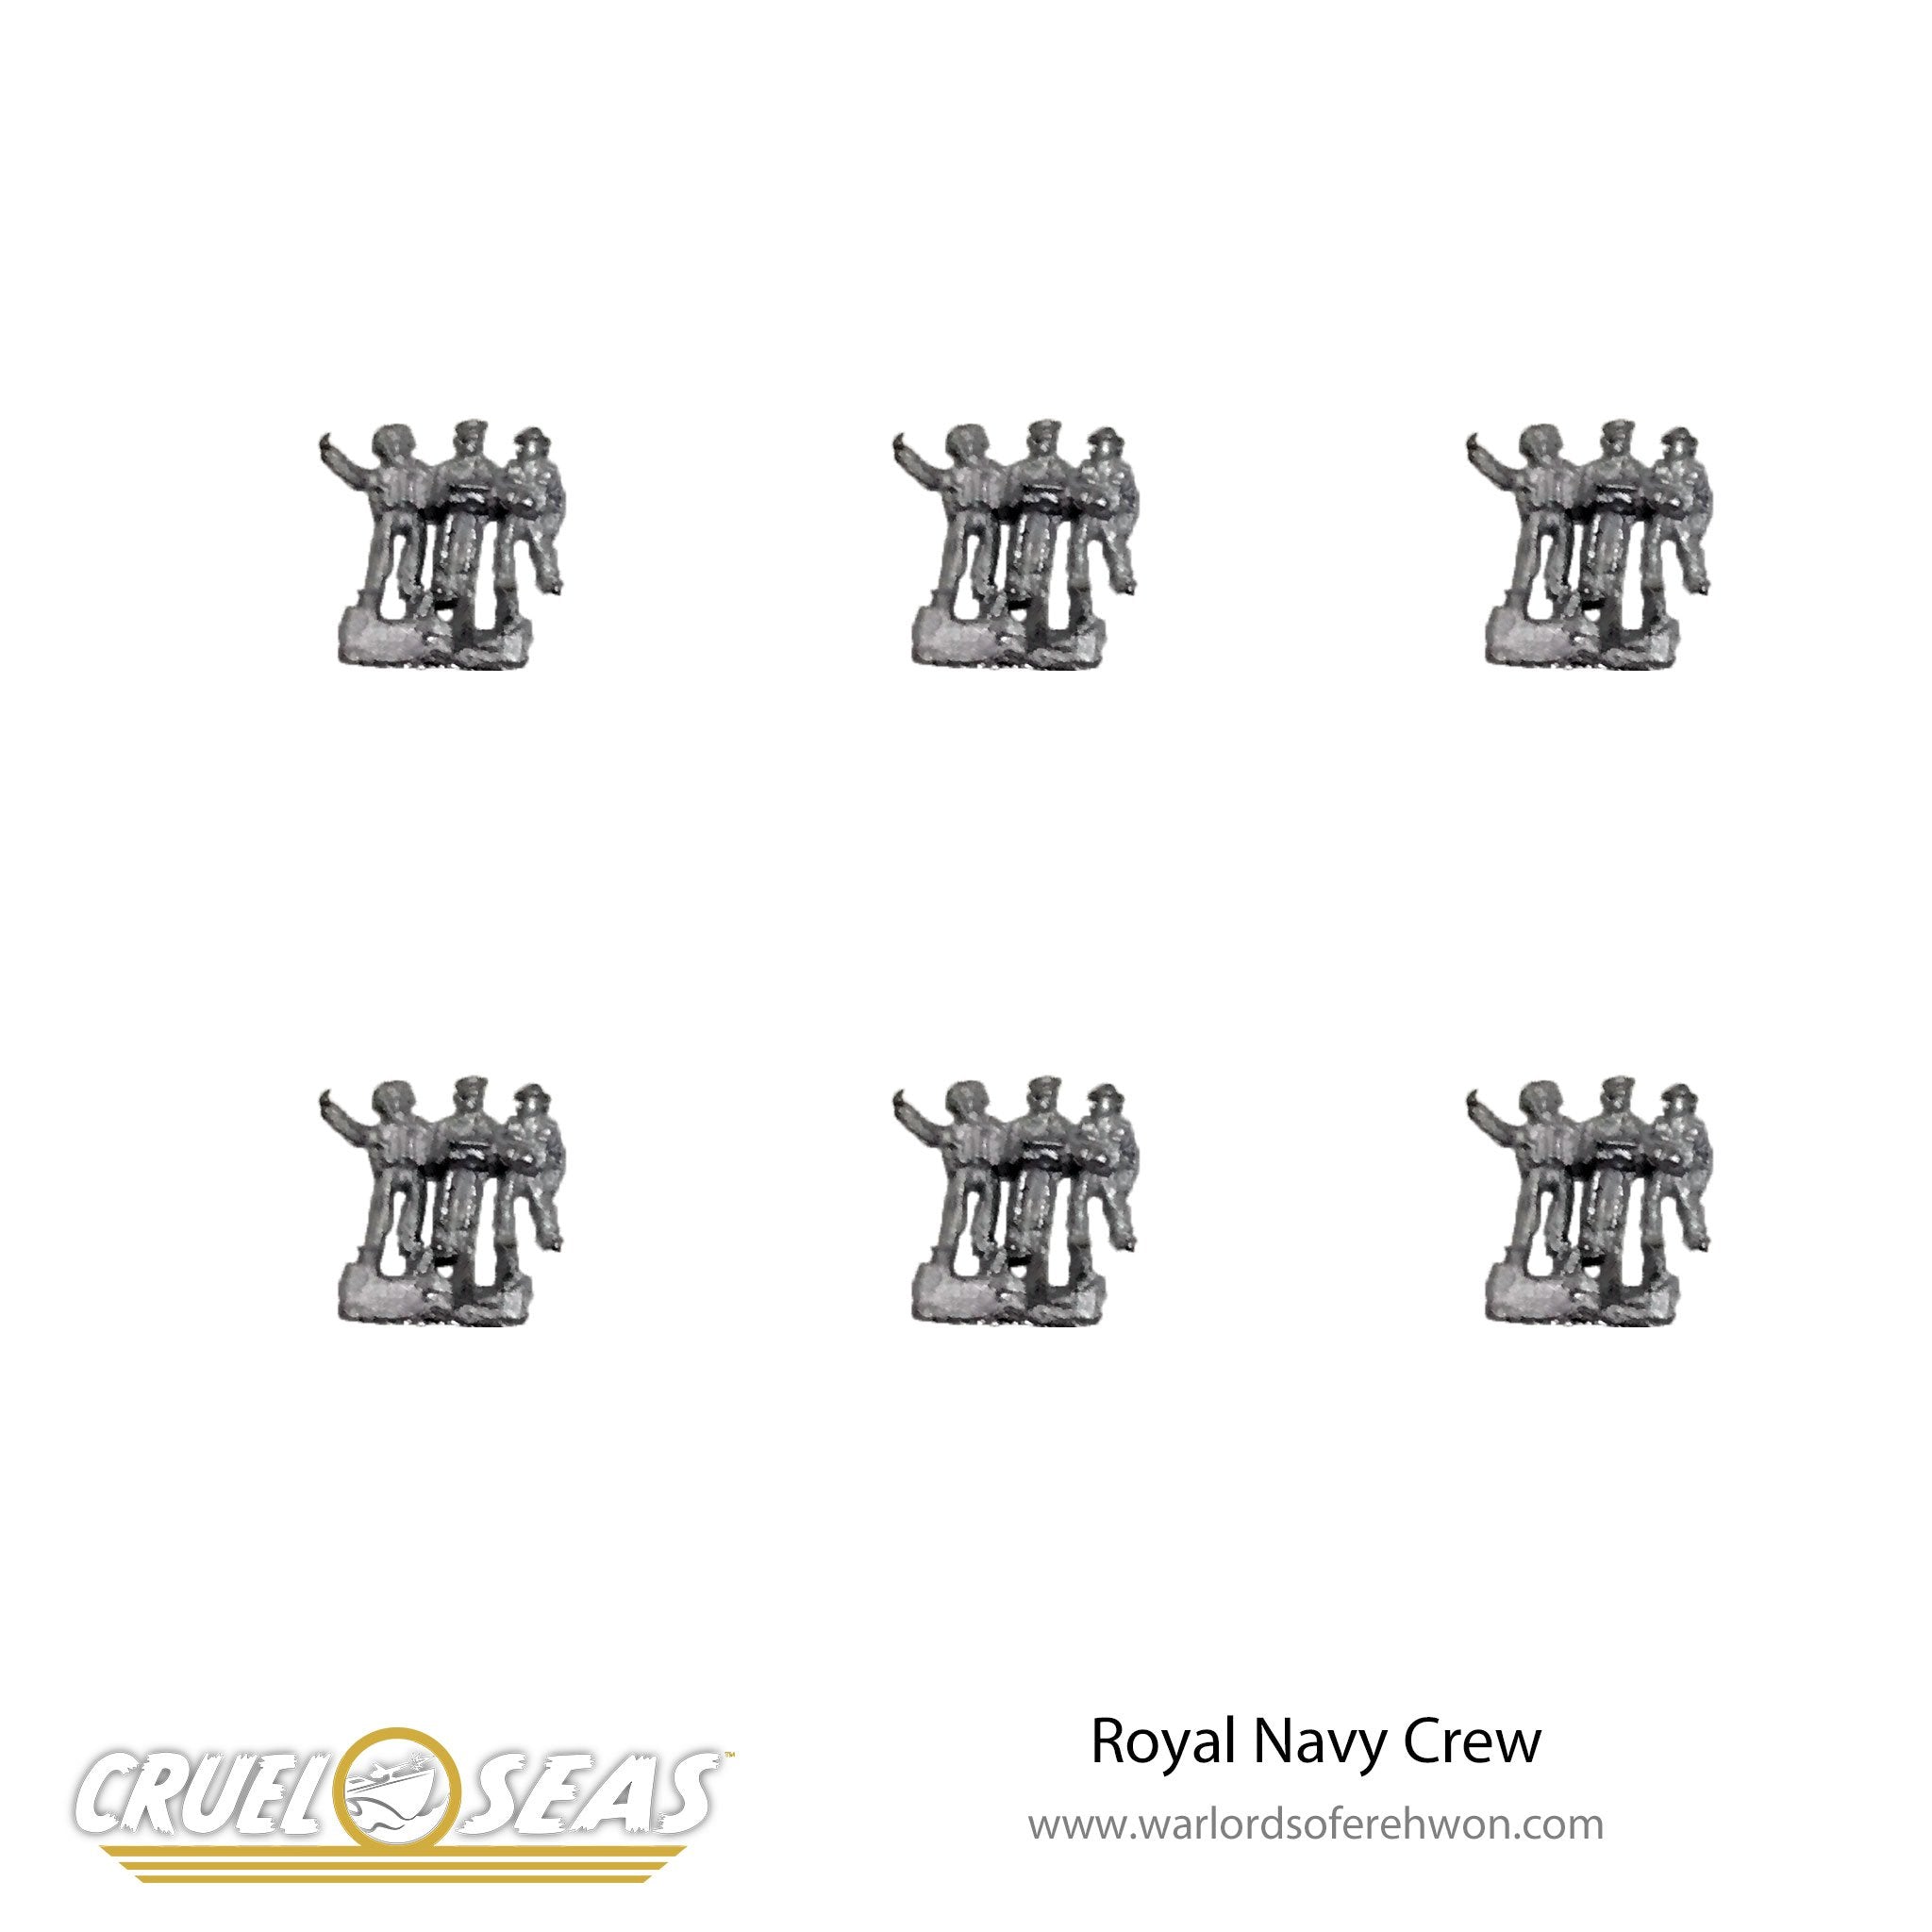 Royal Navy Crew